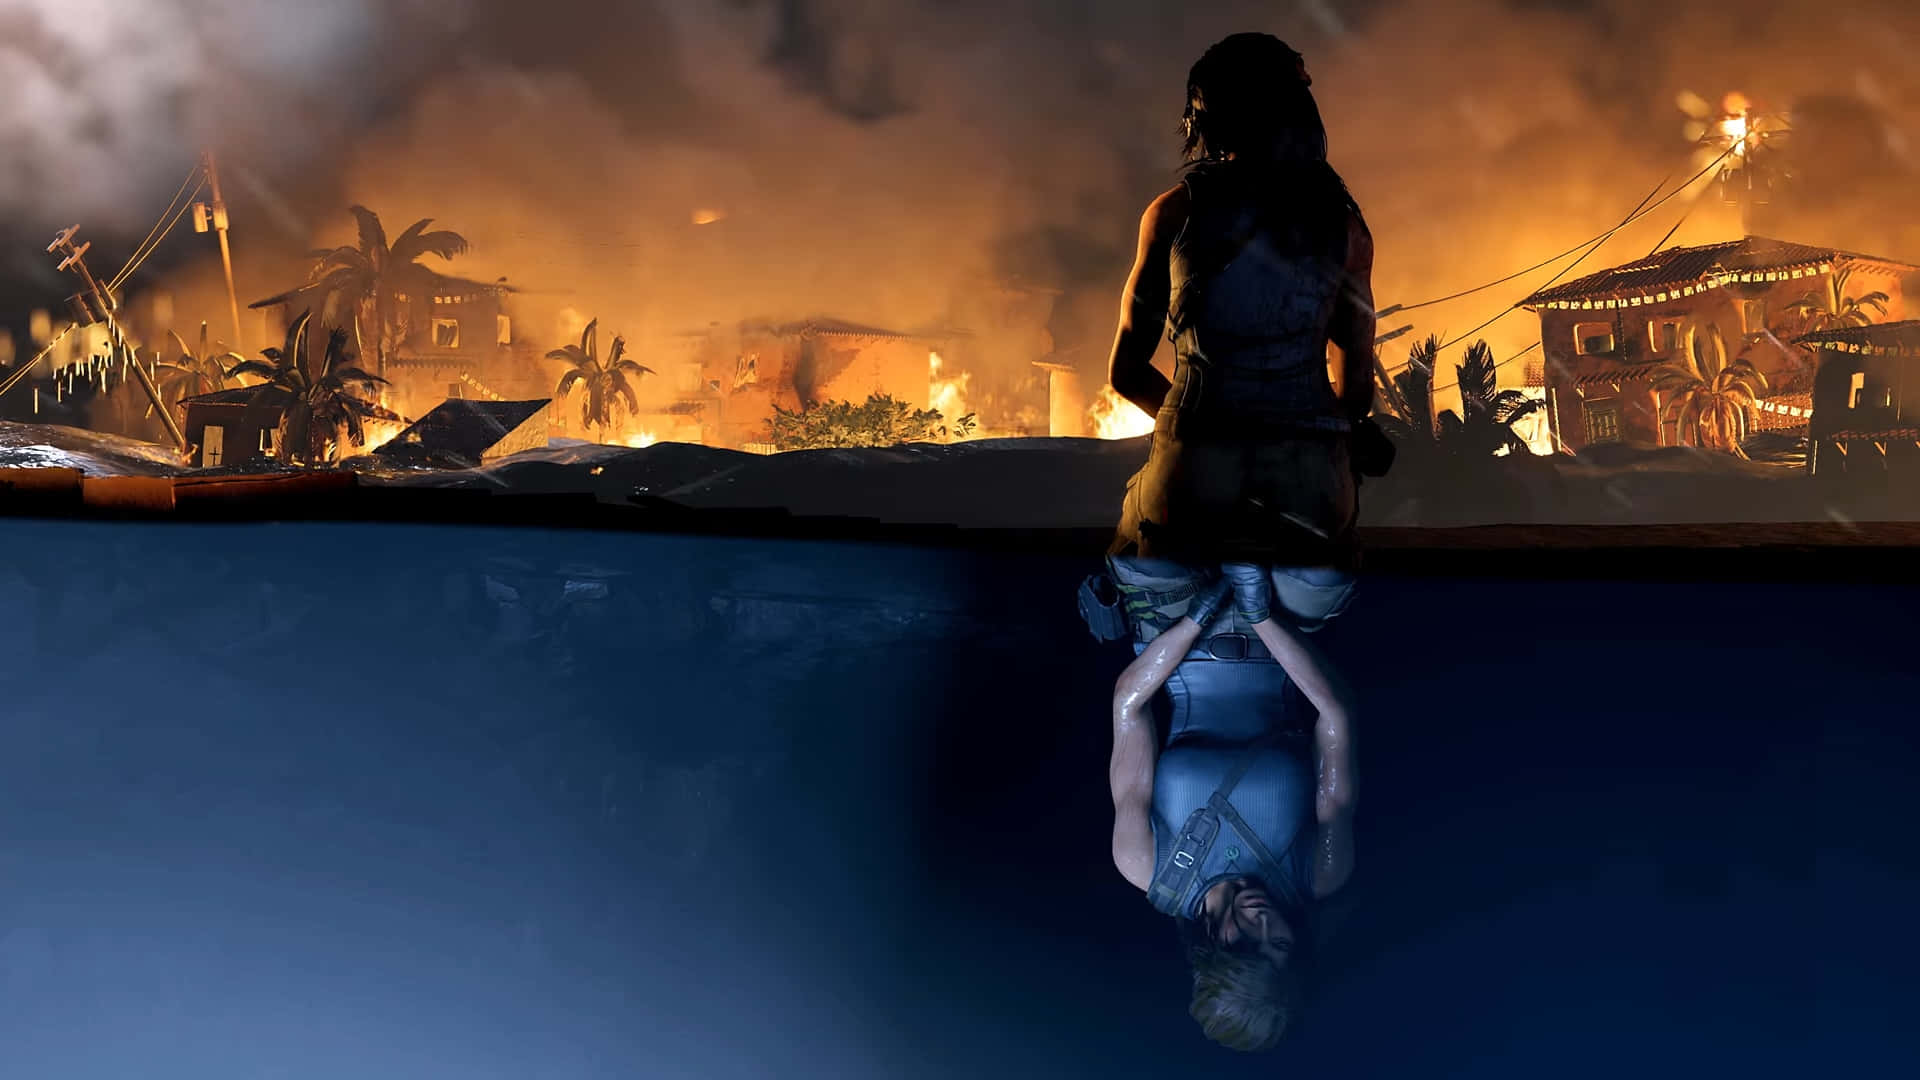 Lara Croft prepares to explore a treacherous tombs in Shadow Of The Tomb Raider.